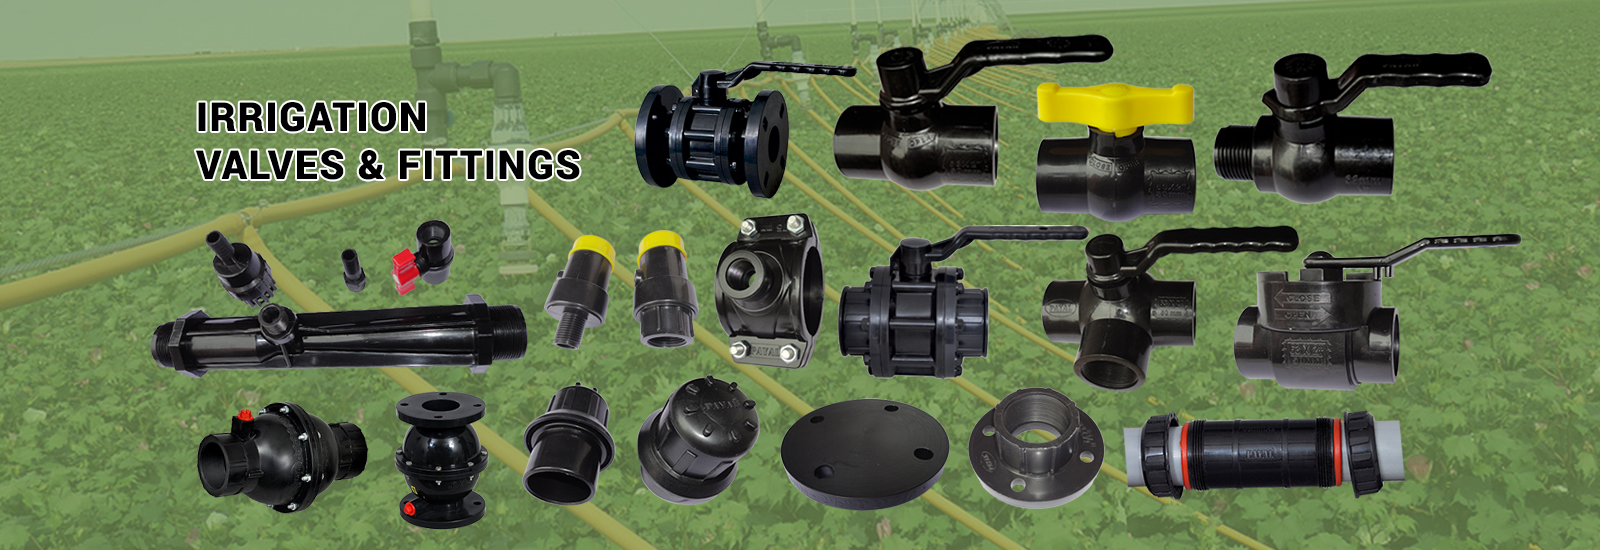 irrigation valves manufacturers